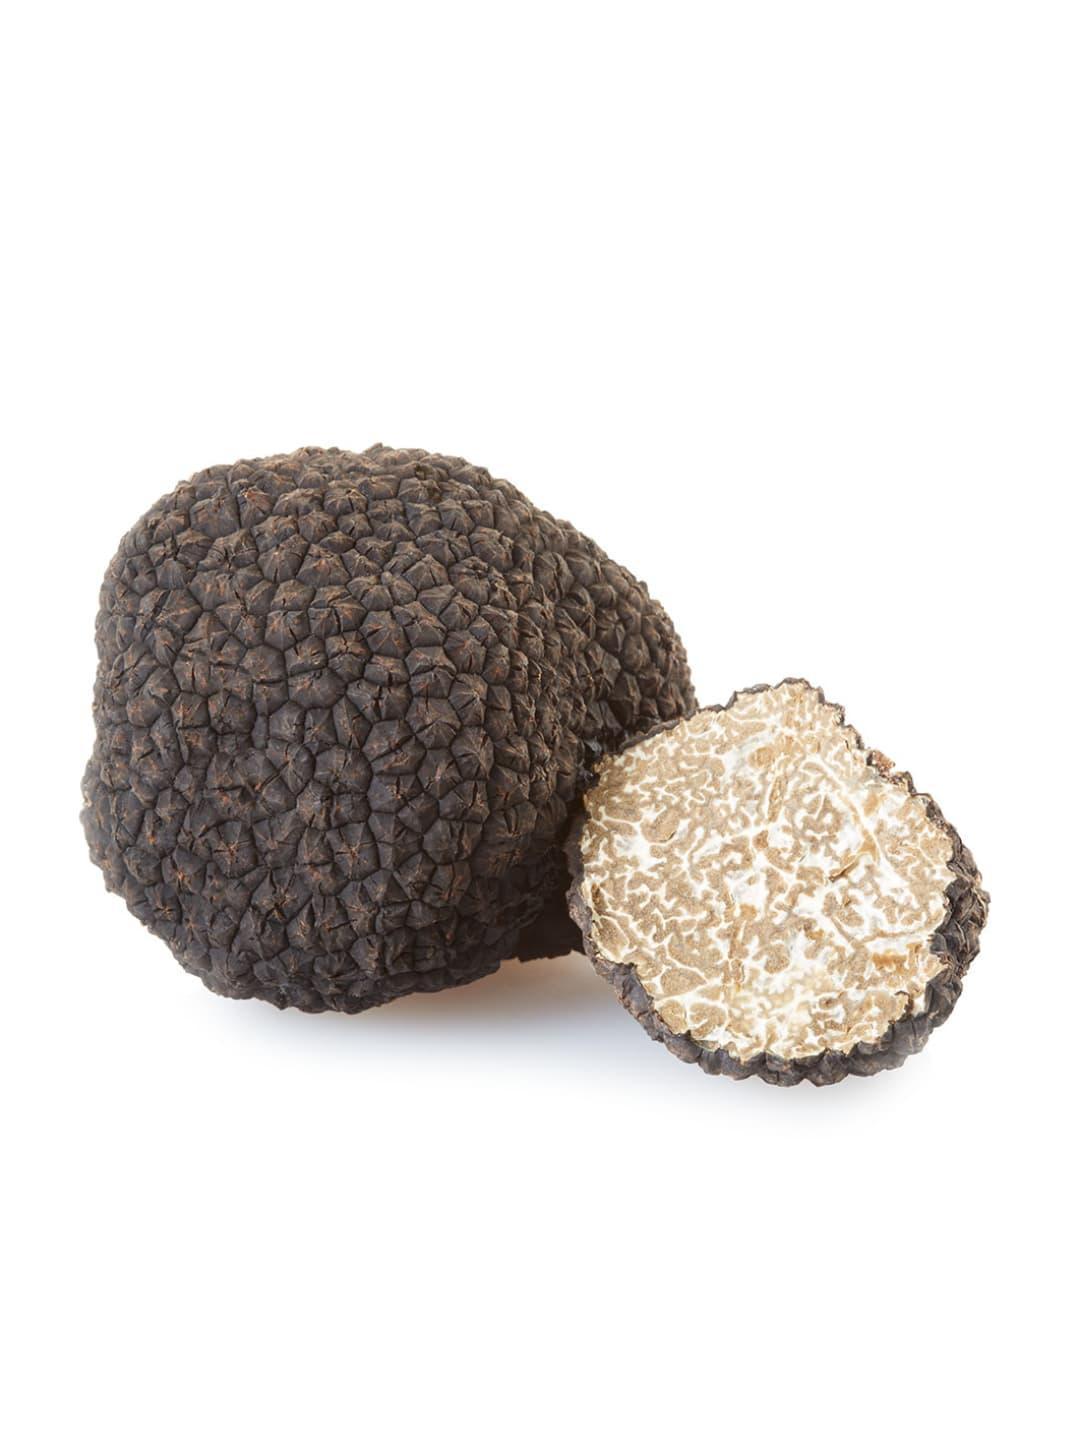 fresh black autumn truffle (tuber uncinatum chatin) 250 gr / 9 oz